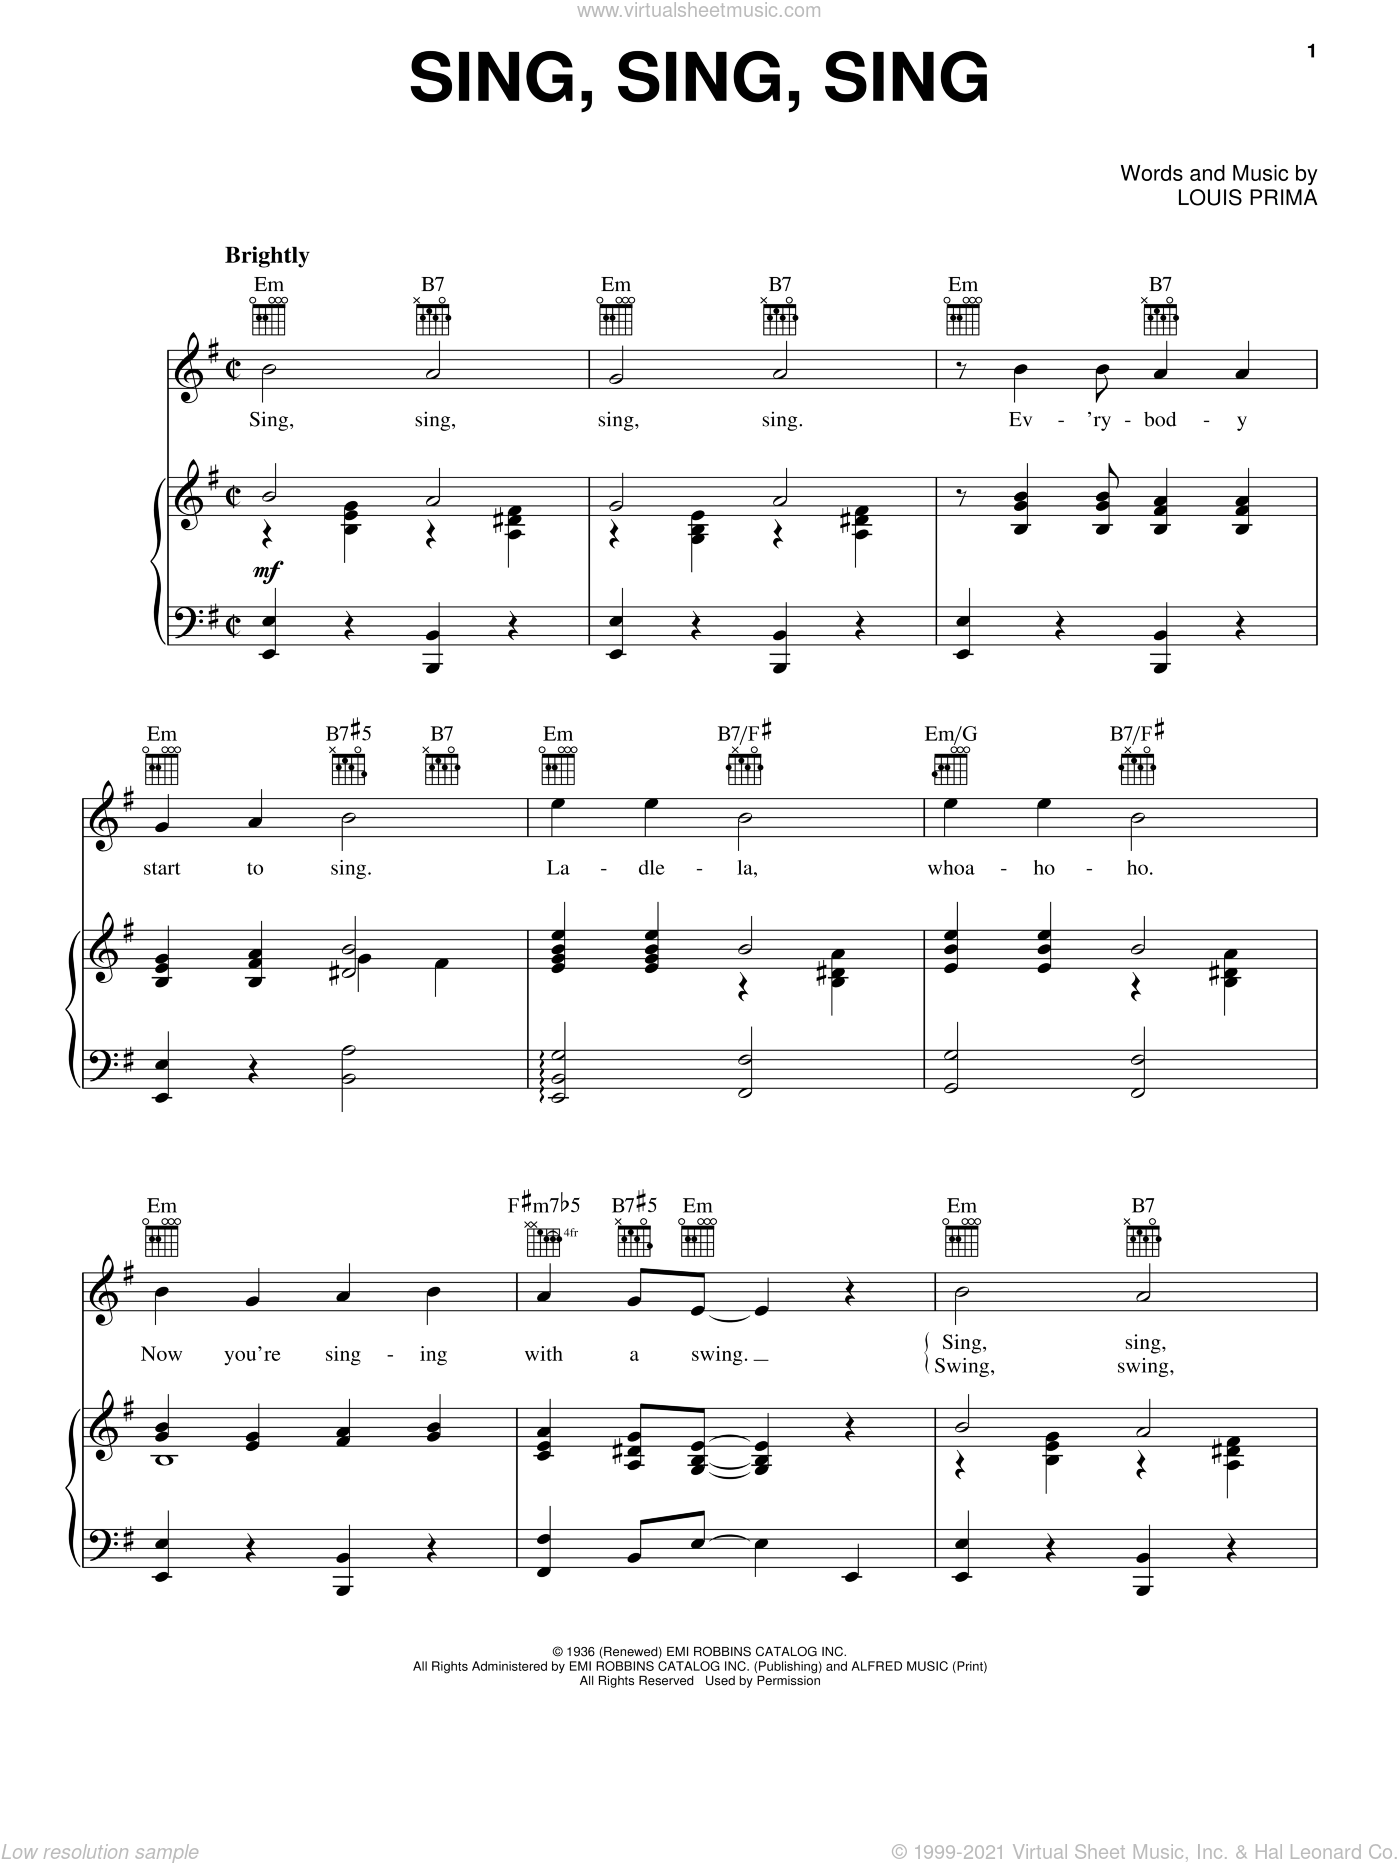 Sing me слова. Бенни Гудмен Синг Синг Синг. Sing Sing Sing Benny Goodman Ноты для фортепиано. Sing Sing Sing Ноты кларнет. Sing Sing Ноты для фортепиано.